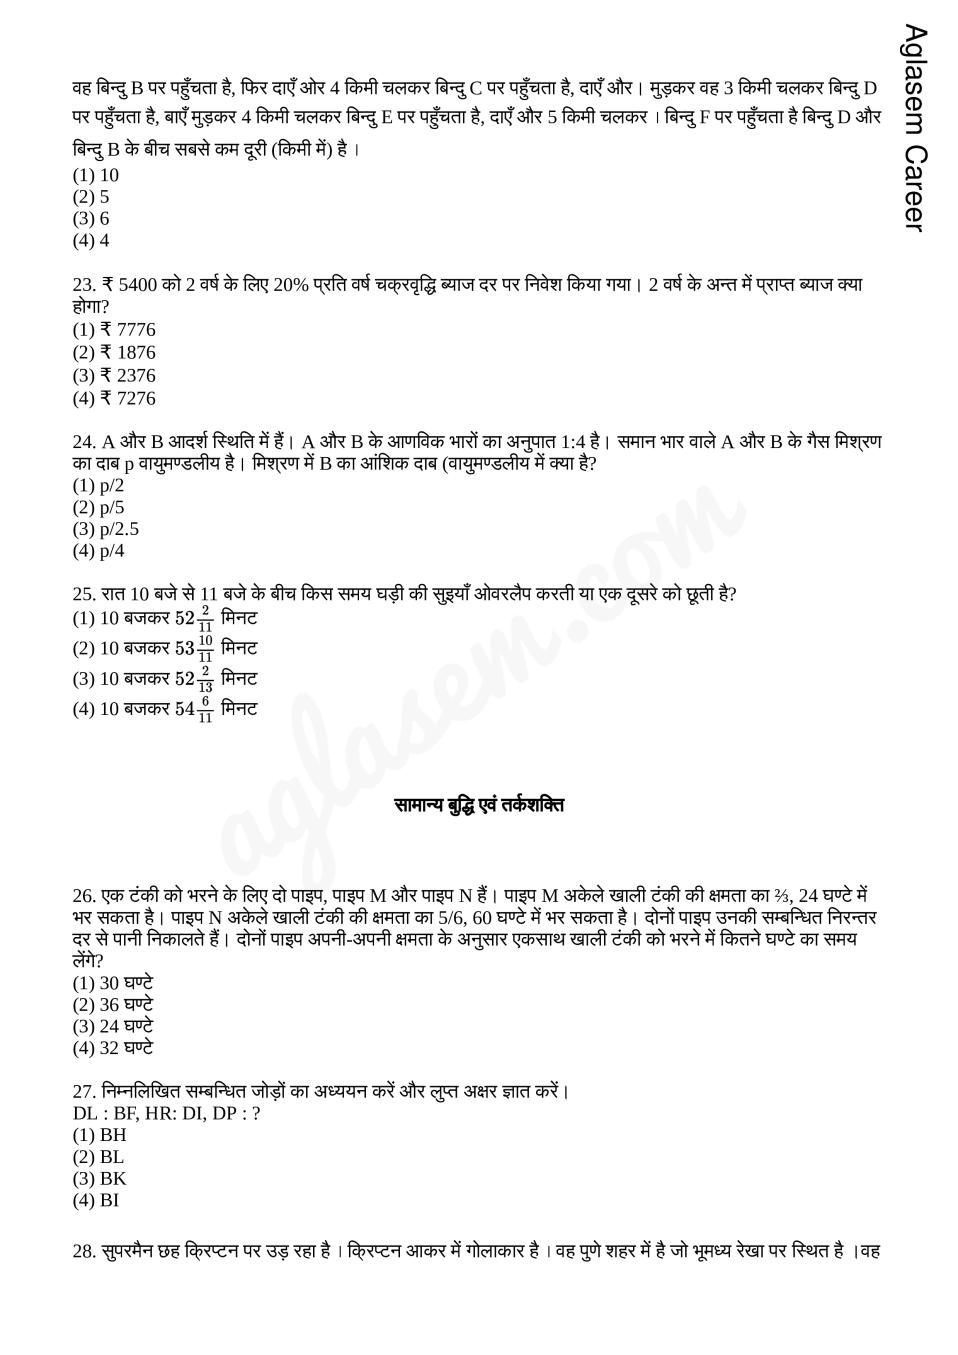 railway exam question answer in hindi